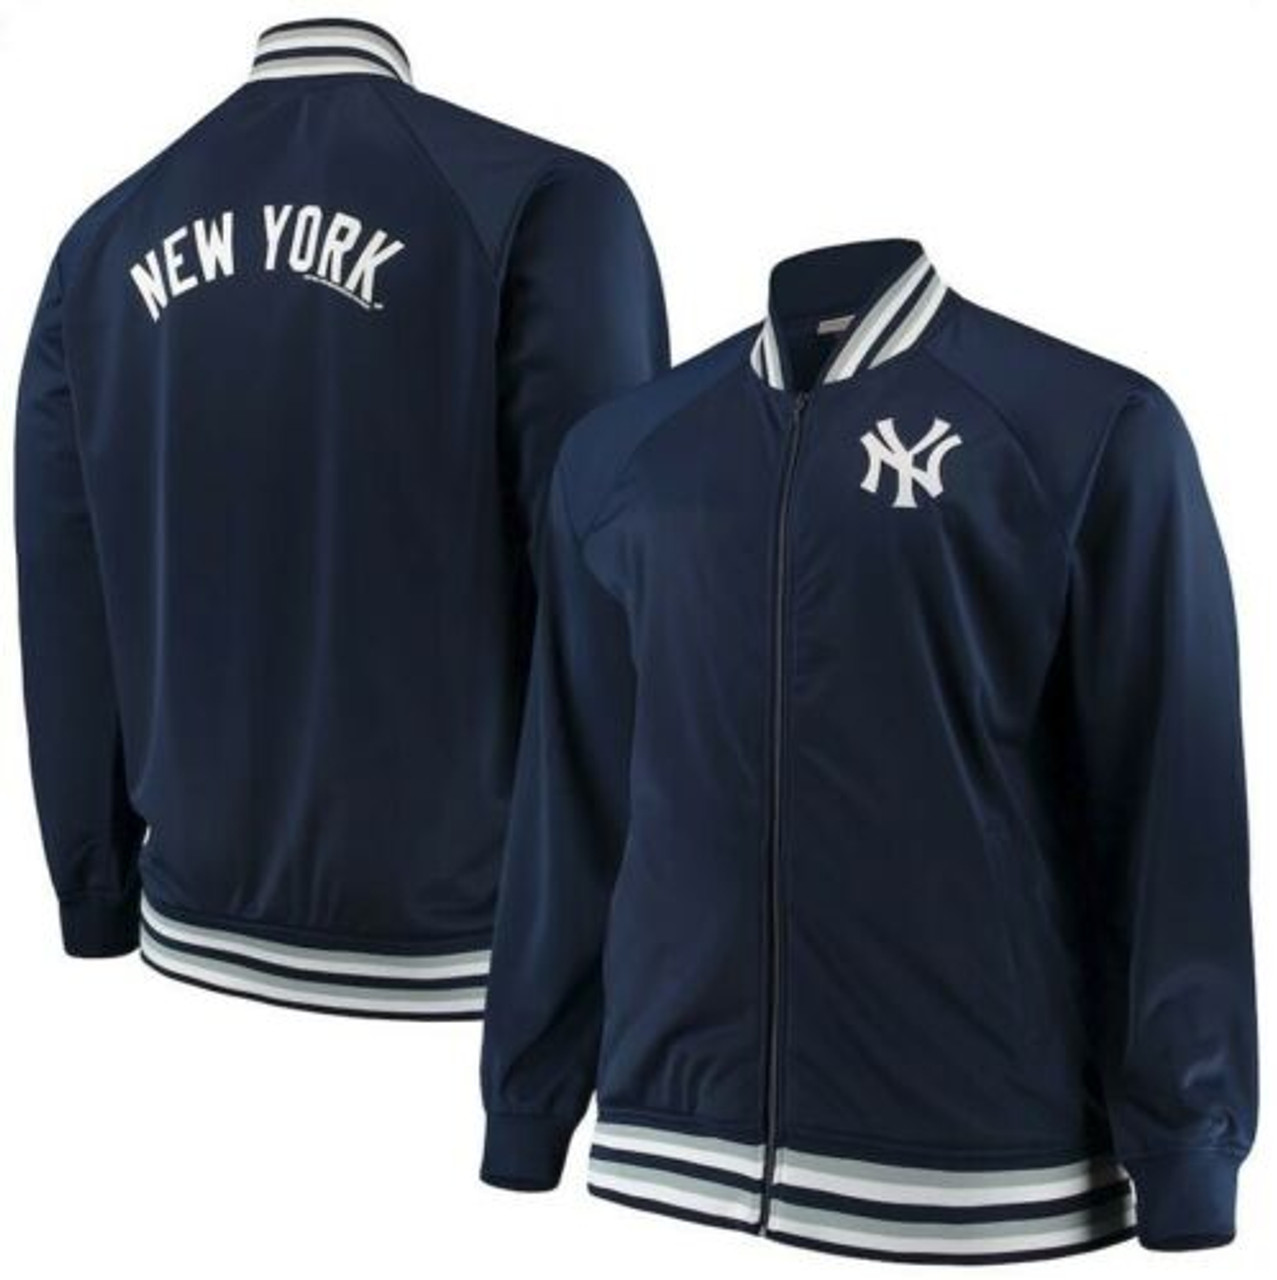 Nike Player (MLB New York Yankees) Men's Full-Zip Jacket.